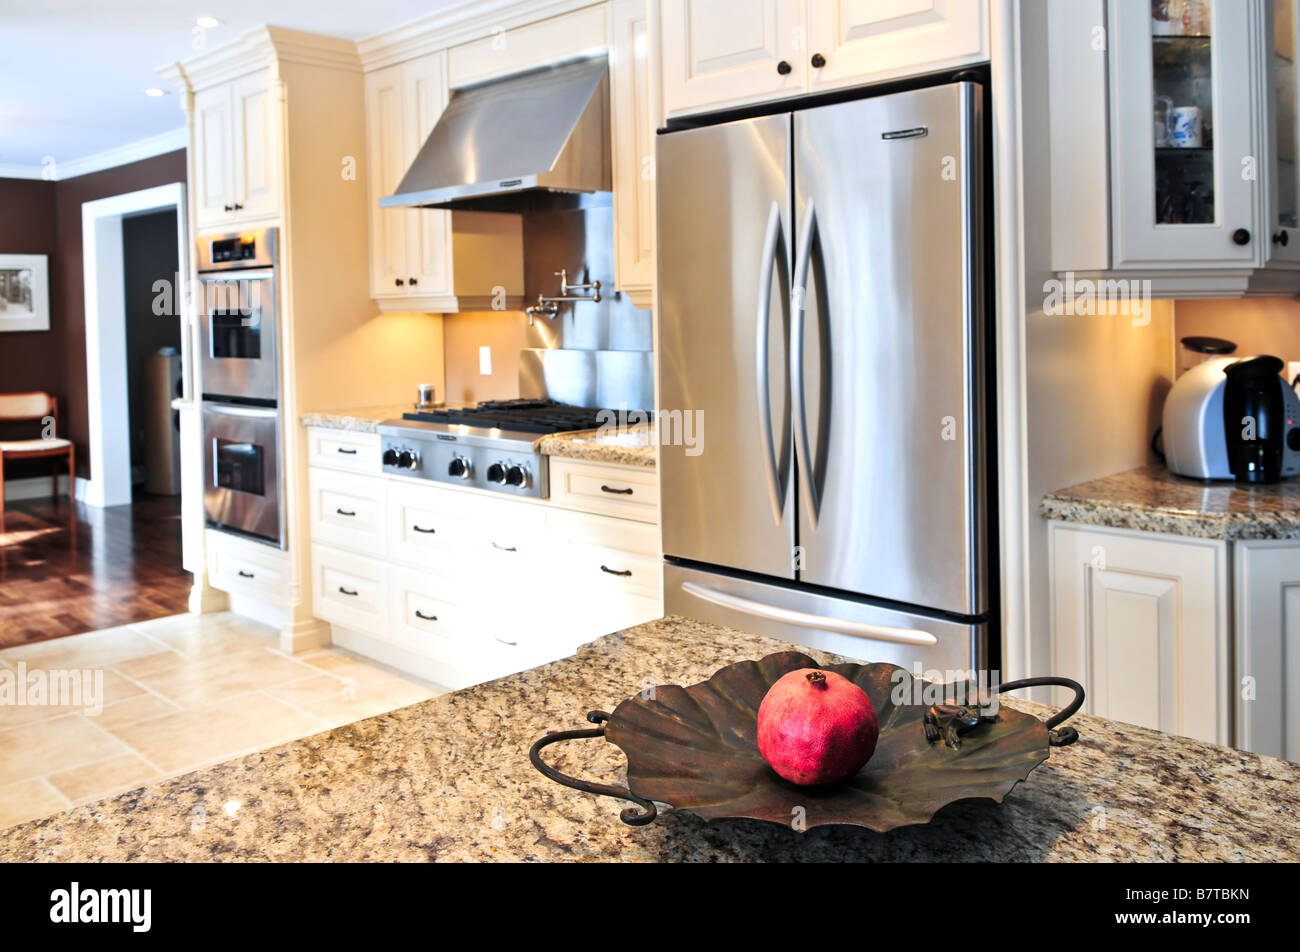 Interior of modern luxury kitchen with stainless steel appliances Stock Photo